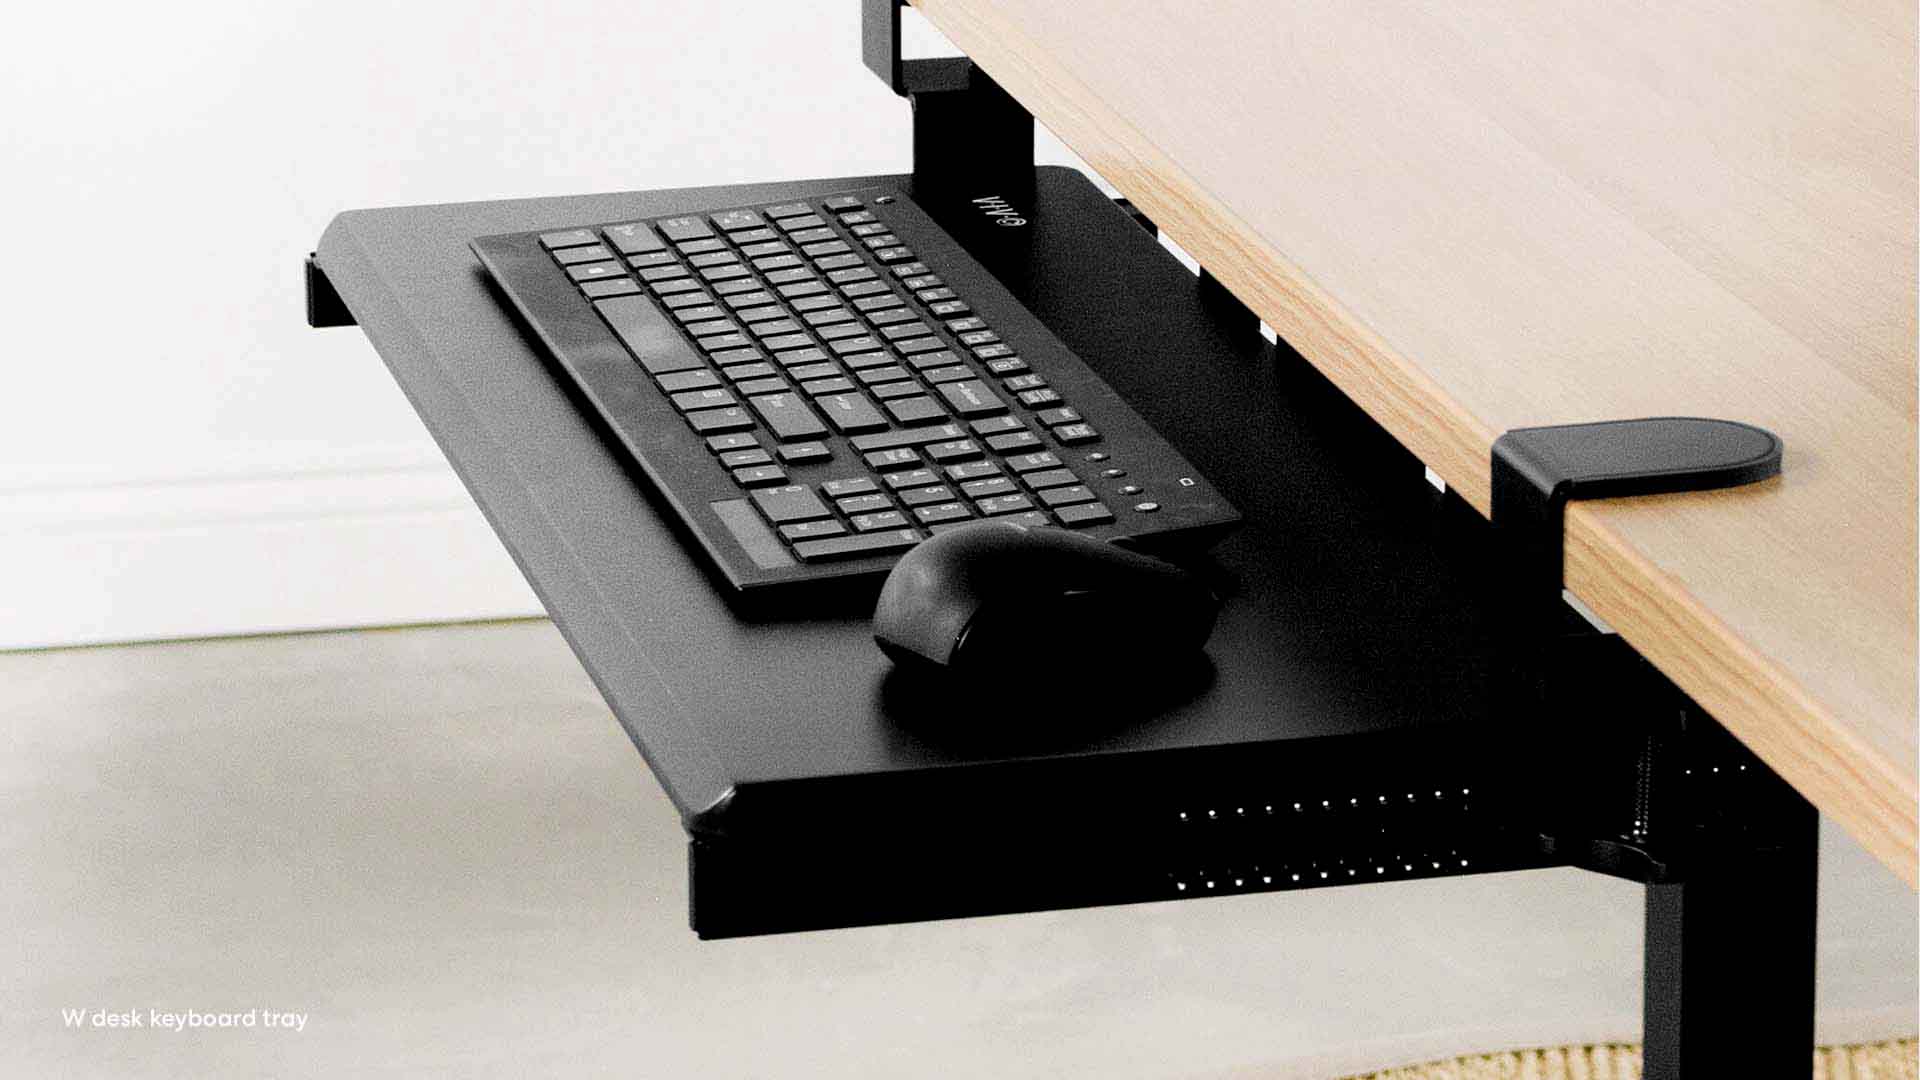 Using a keyboard tray